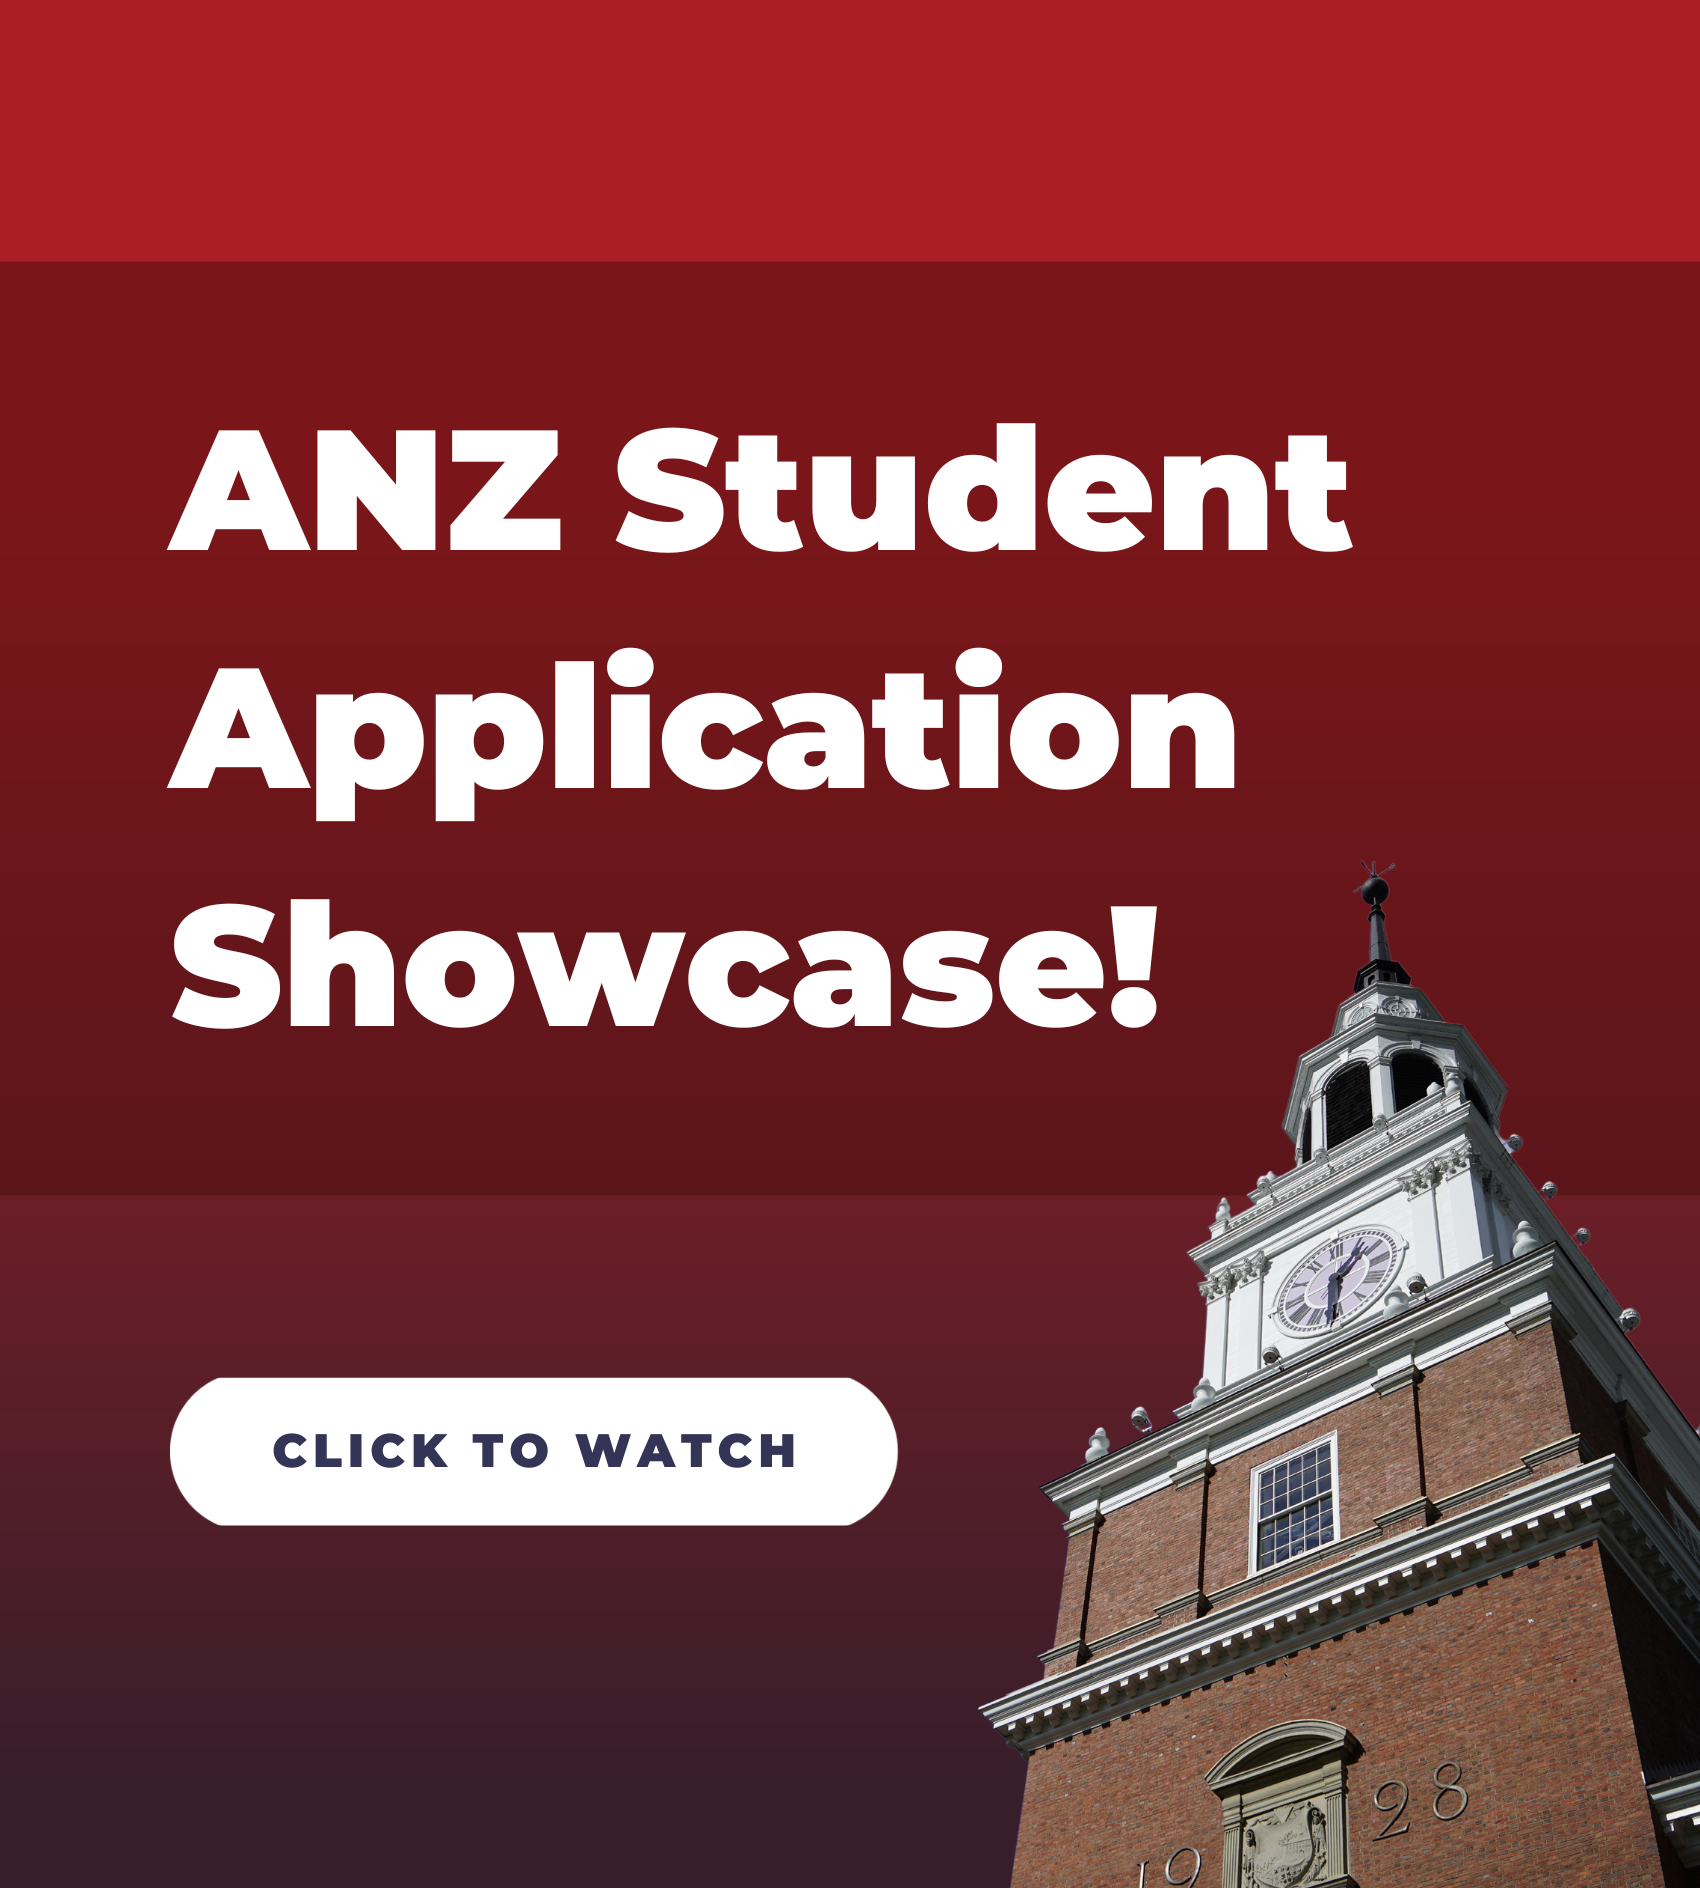 ANZ Successful Student Application Showcase!